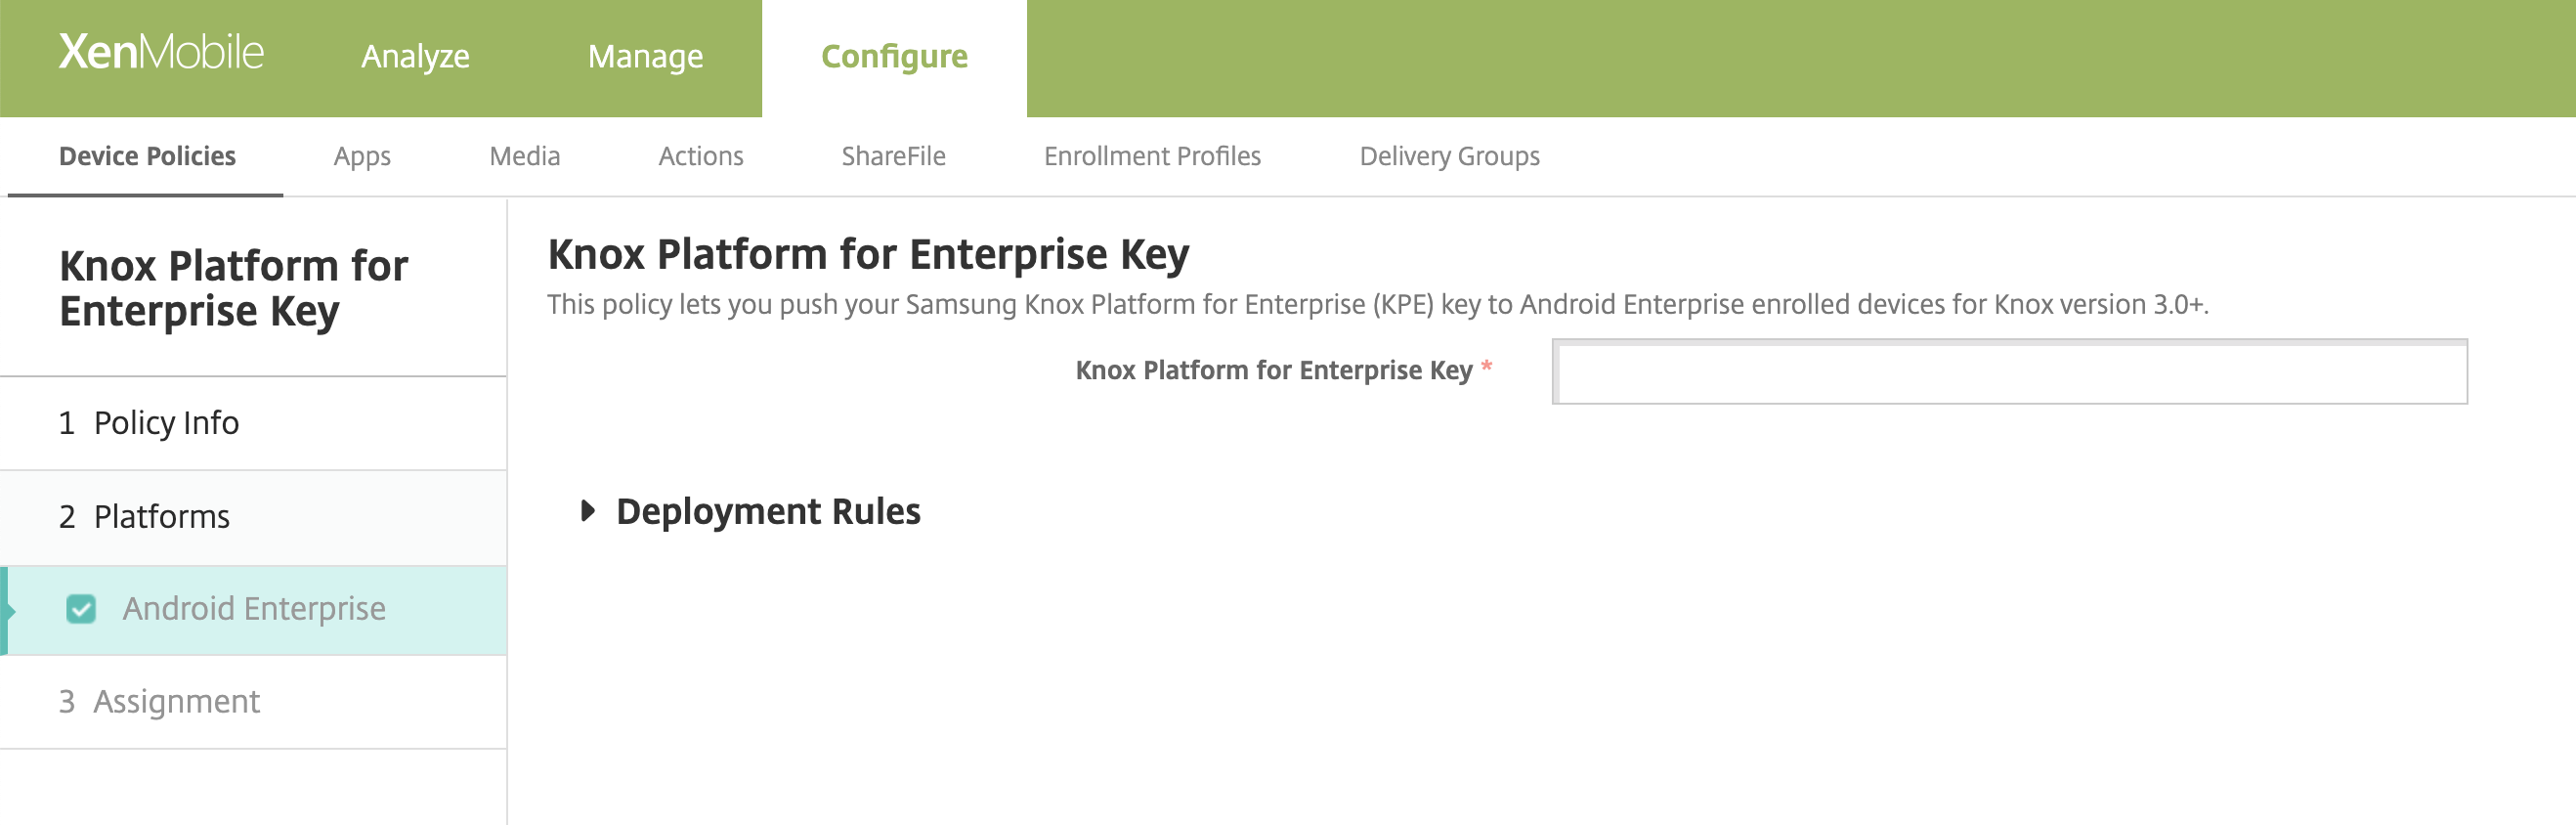 Imagen de la pantalla de la directiva de Knox Platform for Enterprise para Android Enterprise